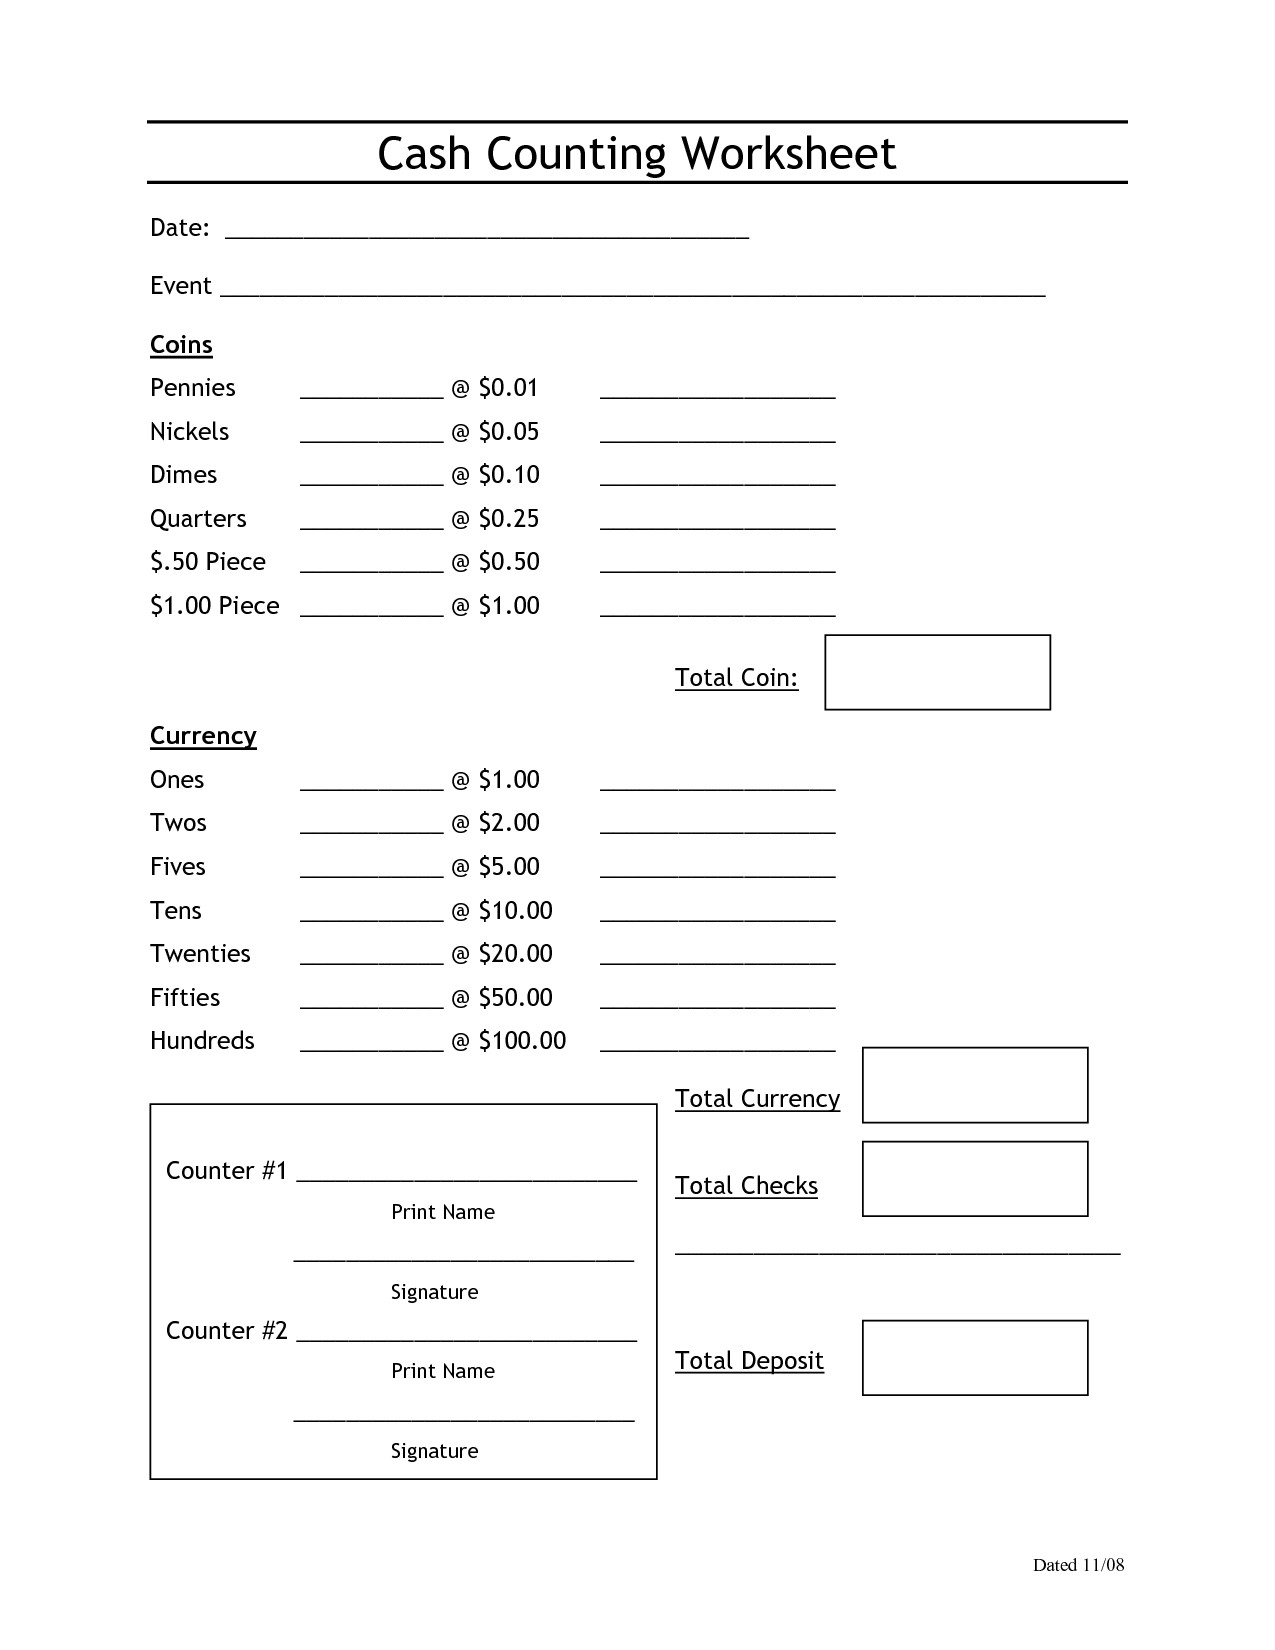 Cash Drawer Count Sheet Template Sample Cash Count Sheet Invitation Samples Blog